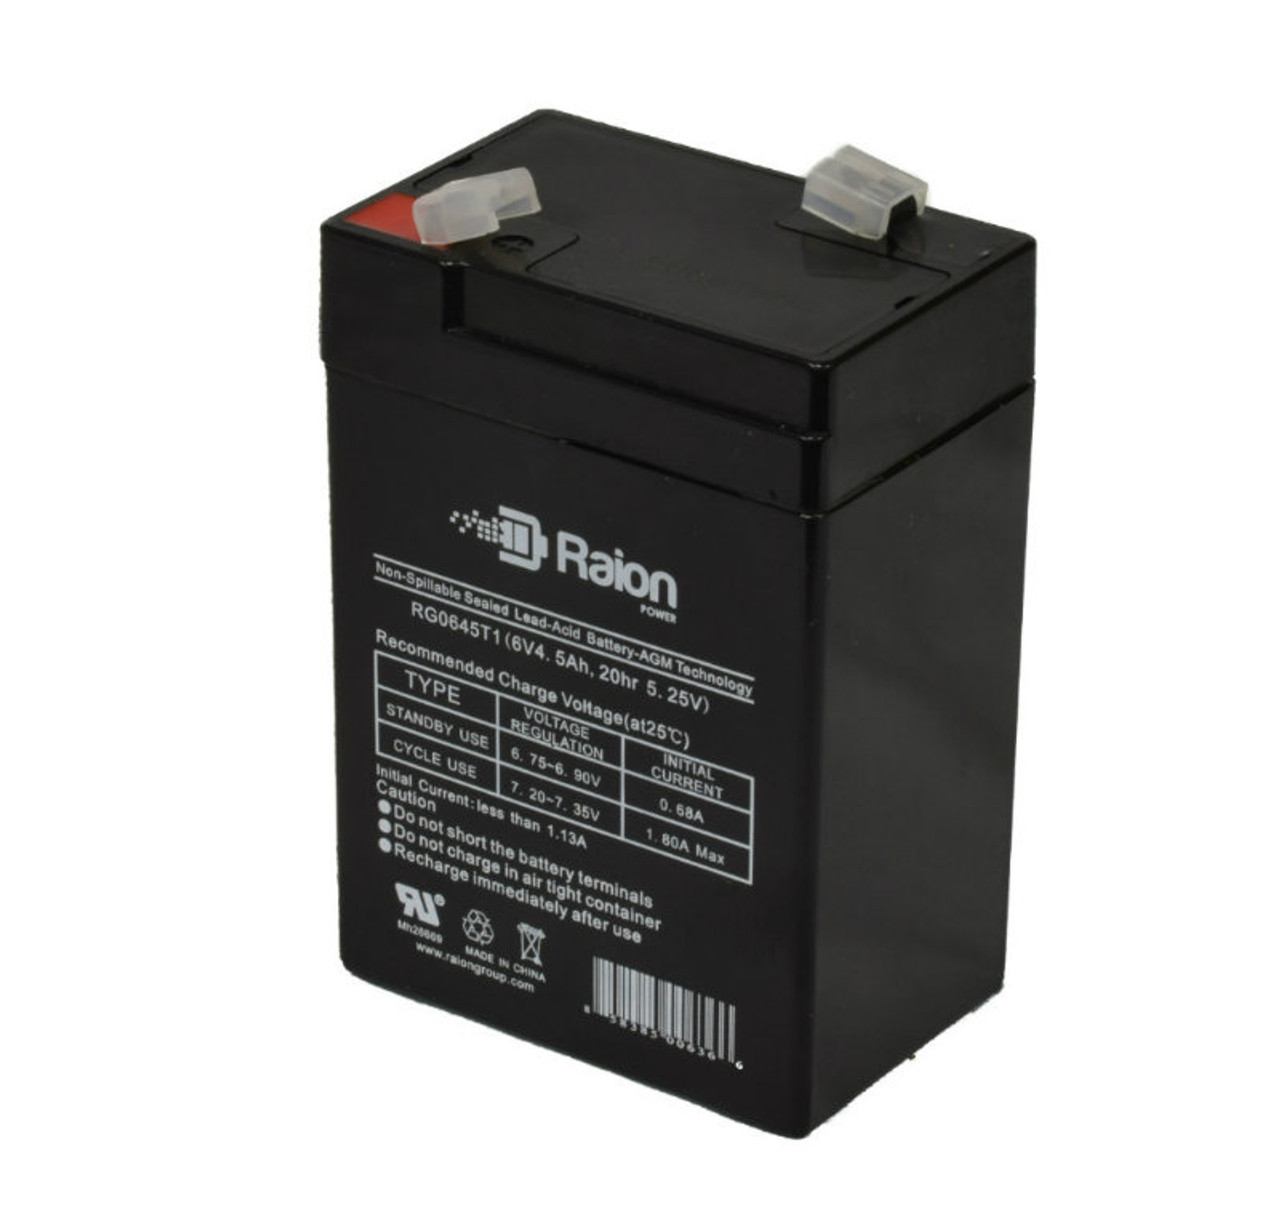 Raion Power RG0645T1 6V 4.5Ah Replacement Battery Cartridge for Sure-Lites SLC1